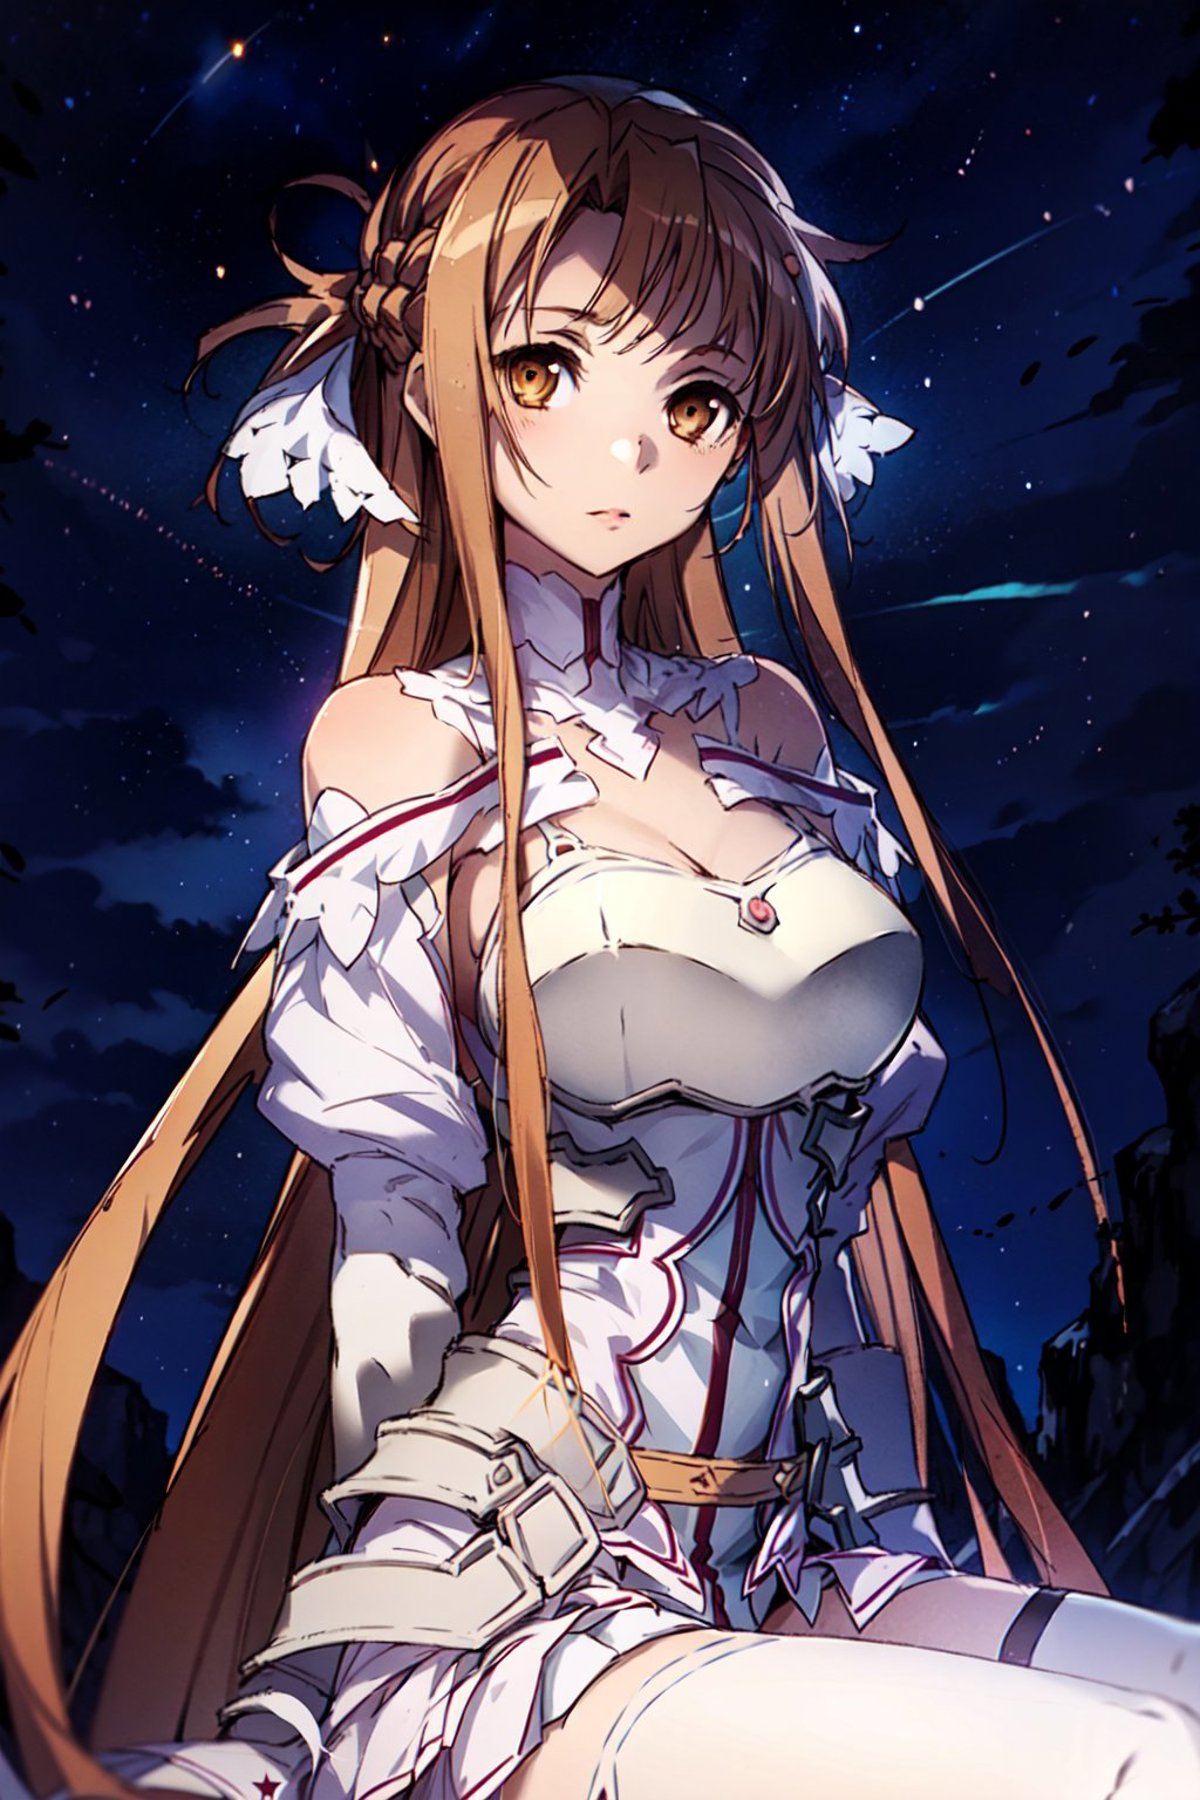 [LoRA] Stacia - Goddess of Creation | Asuna | Underworld | SAO image by L115A4